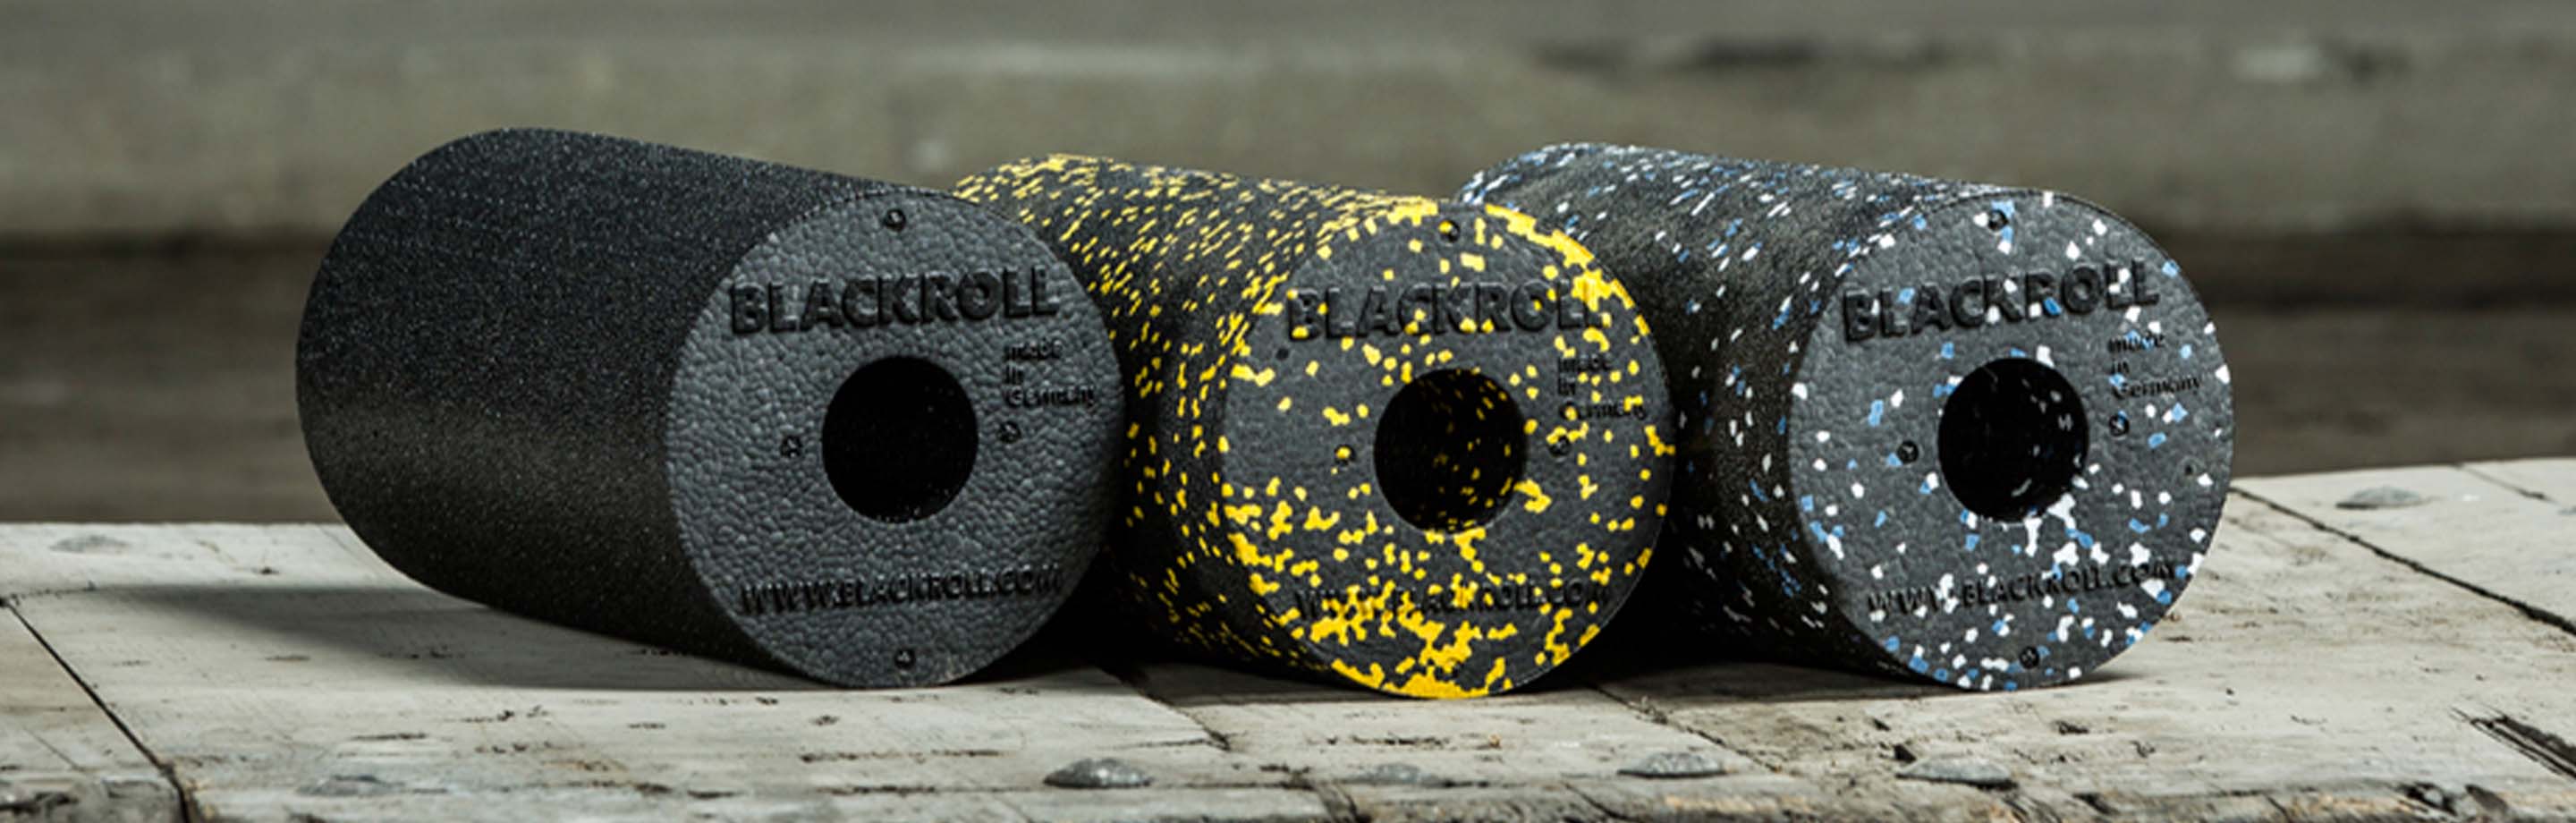 Blackroll foam-rollers, fascia-rollers & meer - voor een sportieve lifestyle